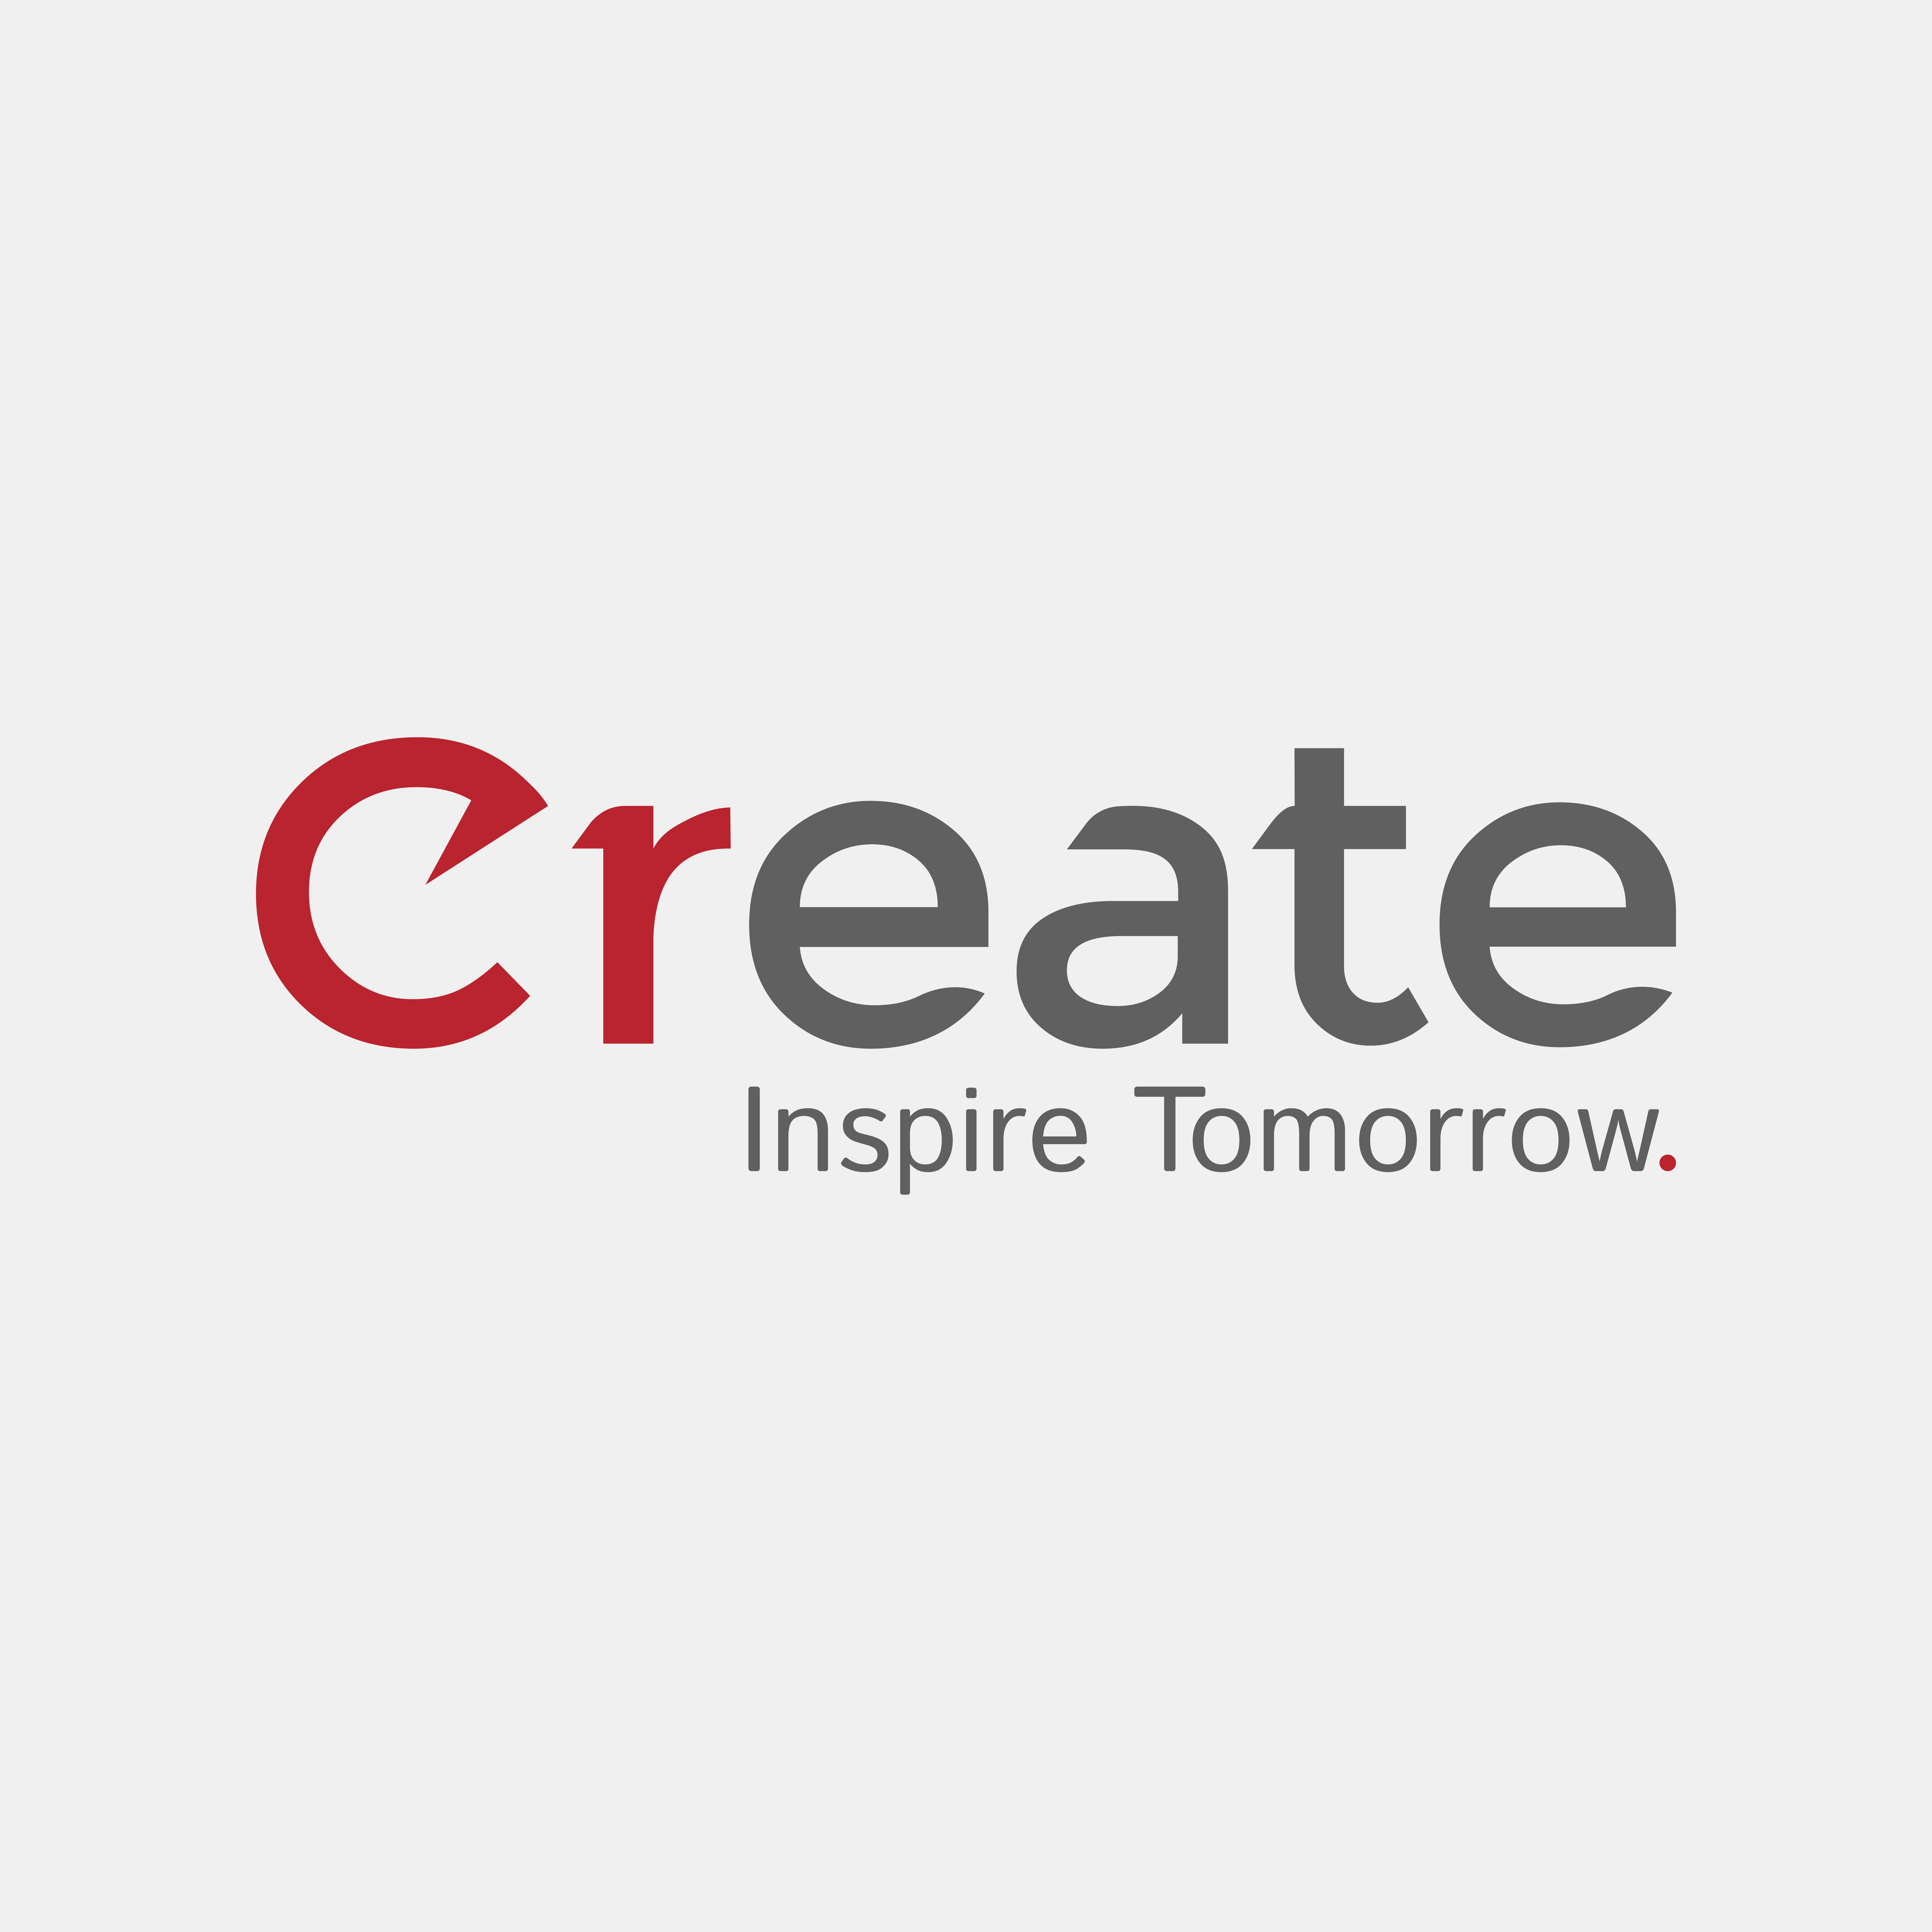 Create logo with tagline